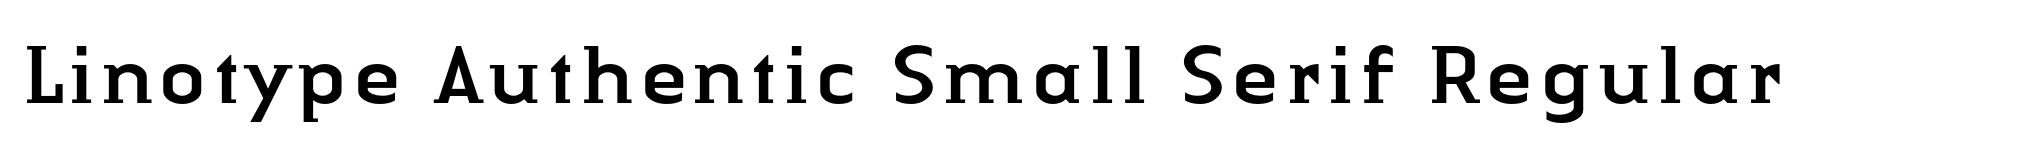 Linotype Authentic Small Serif Regular image